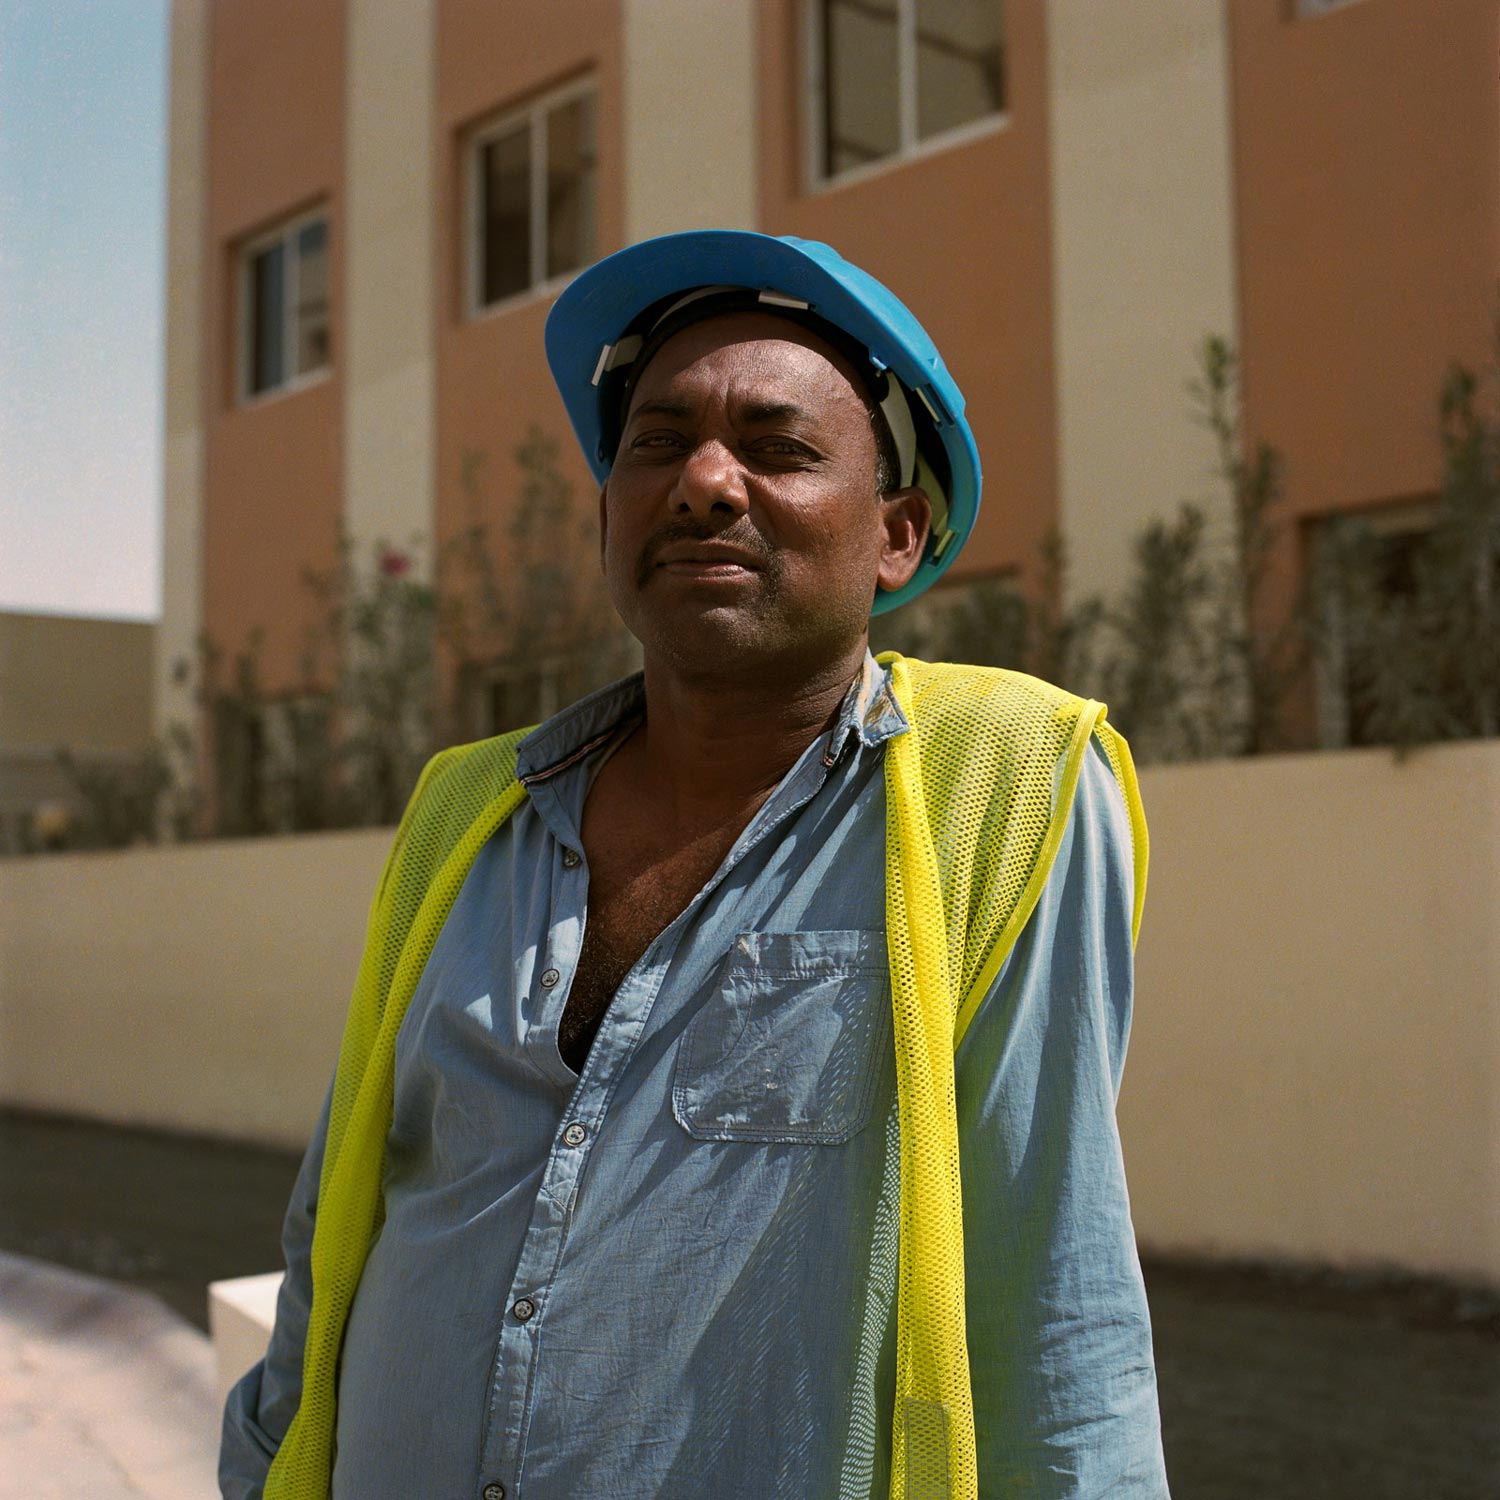 Construction worker in Dubai.